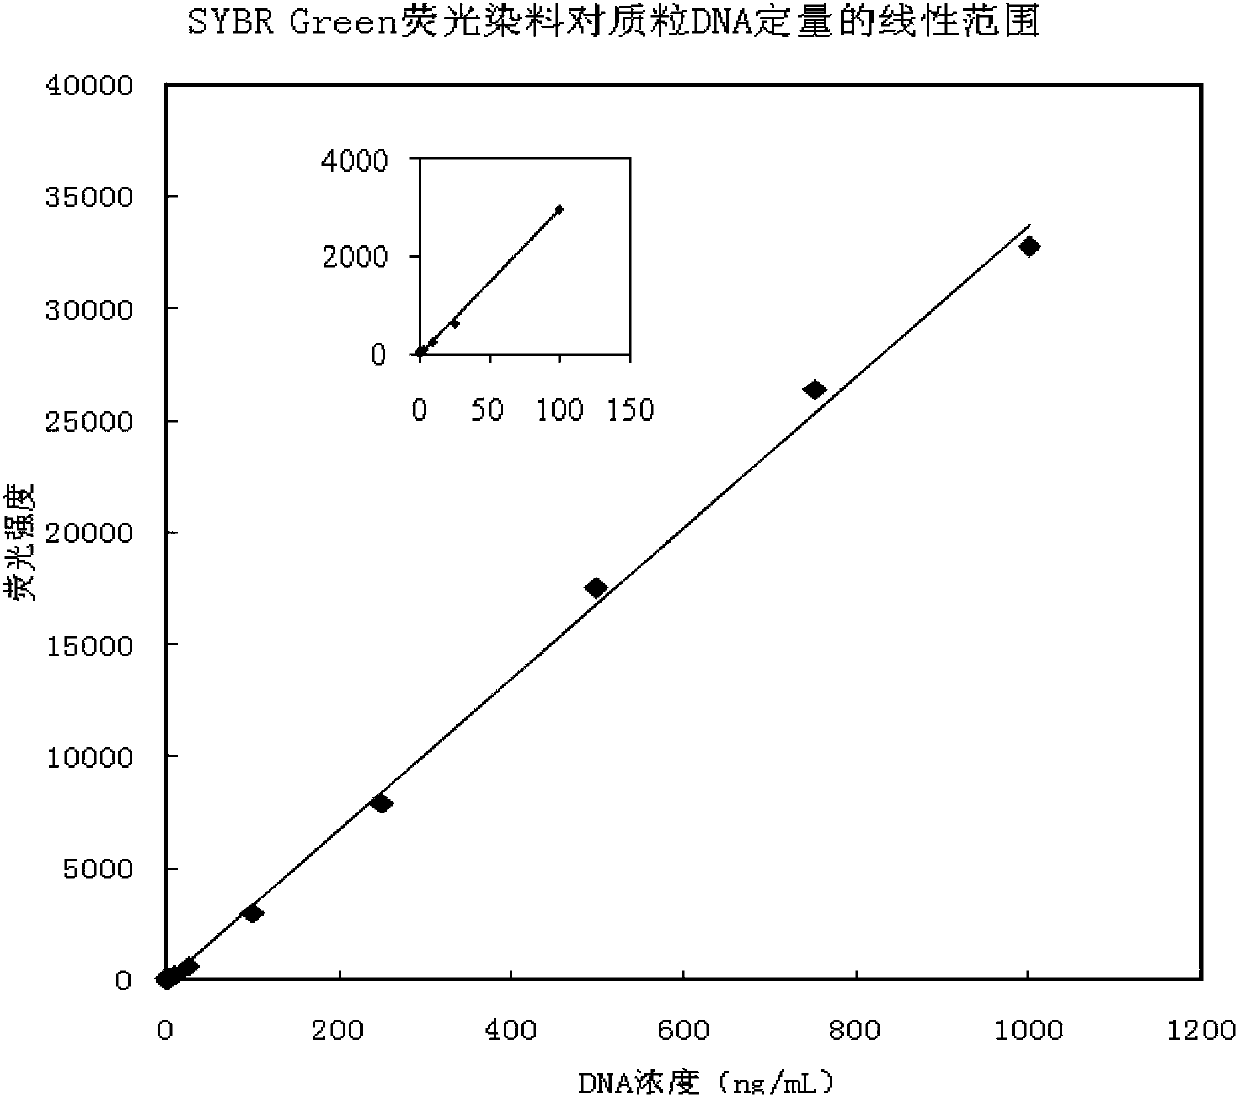 DNA quantitative detection method and kit using SYBR Green fluorescent dye